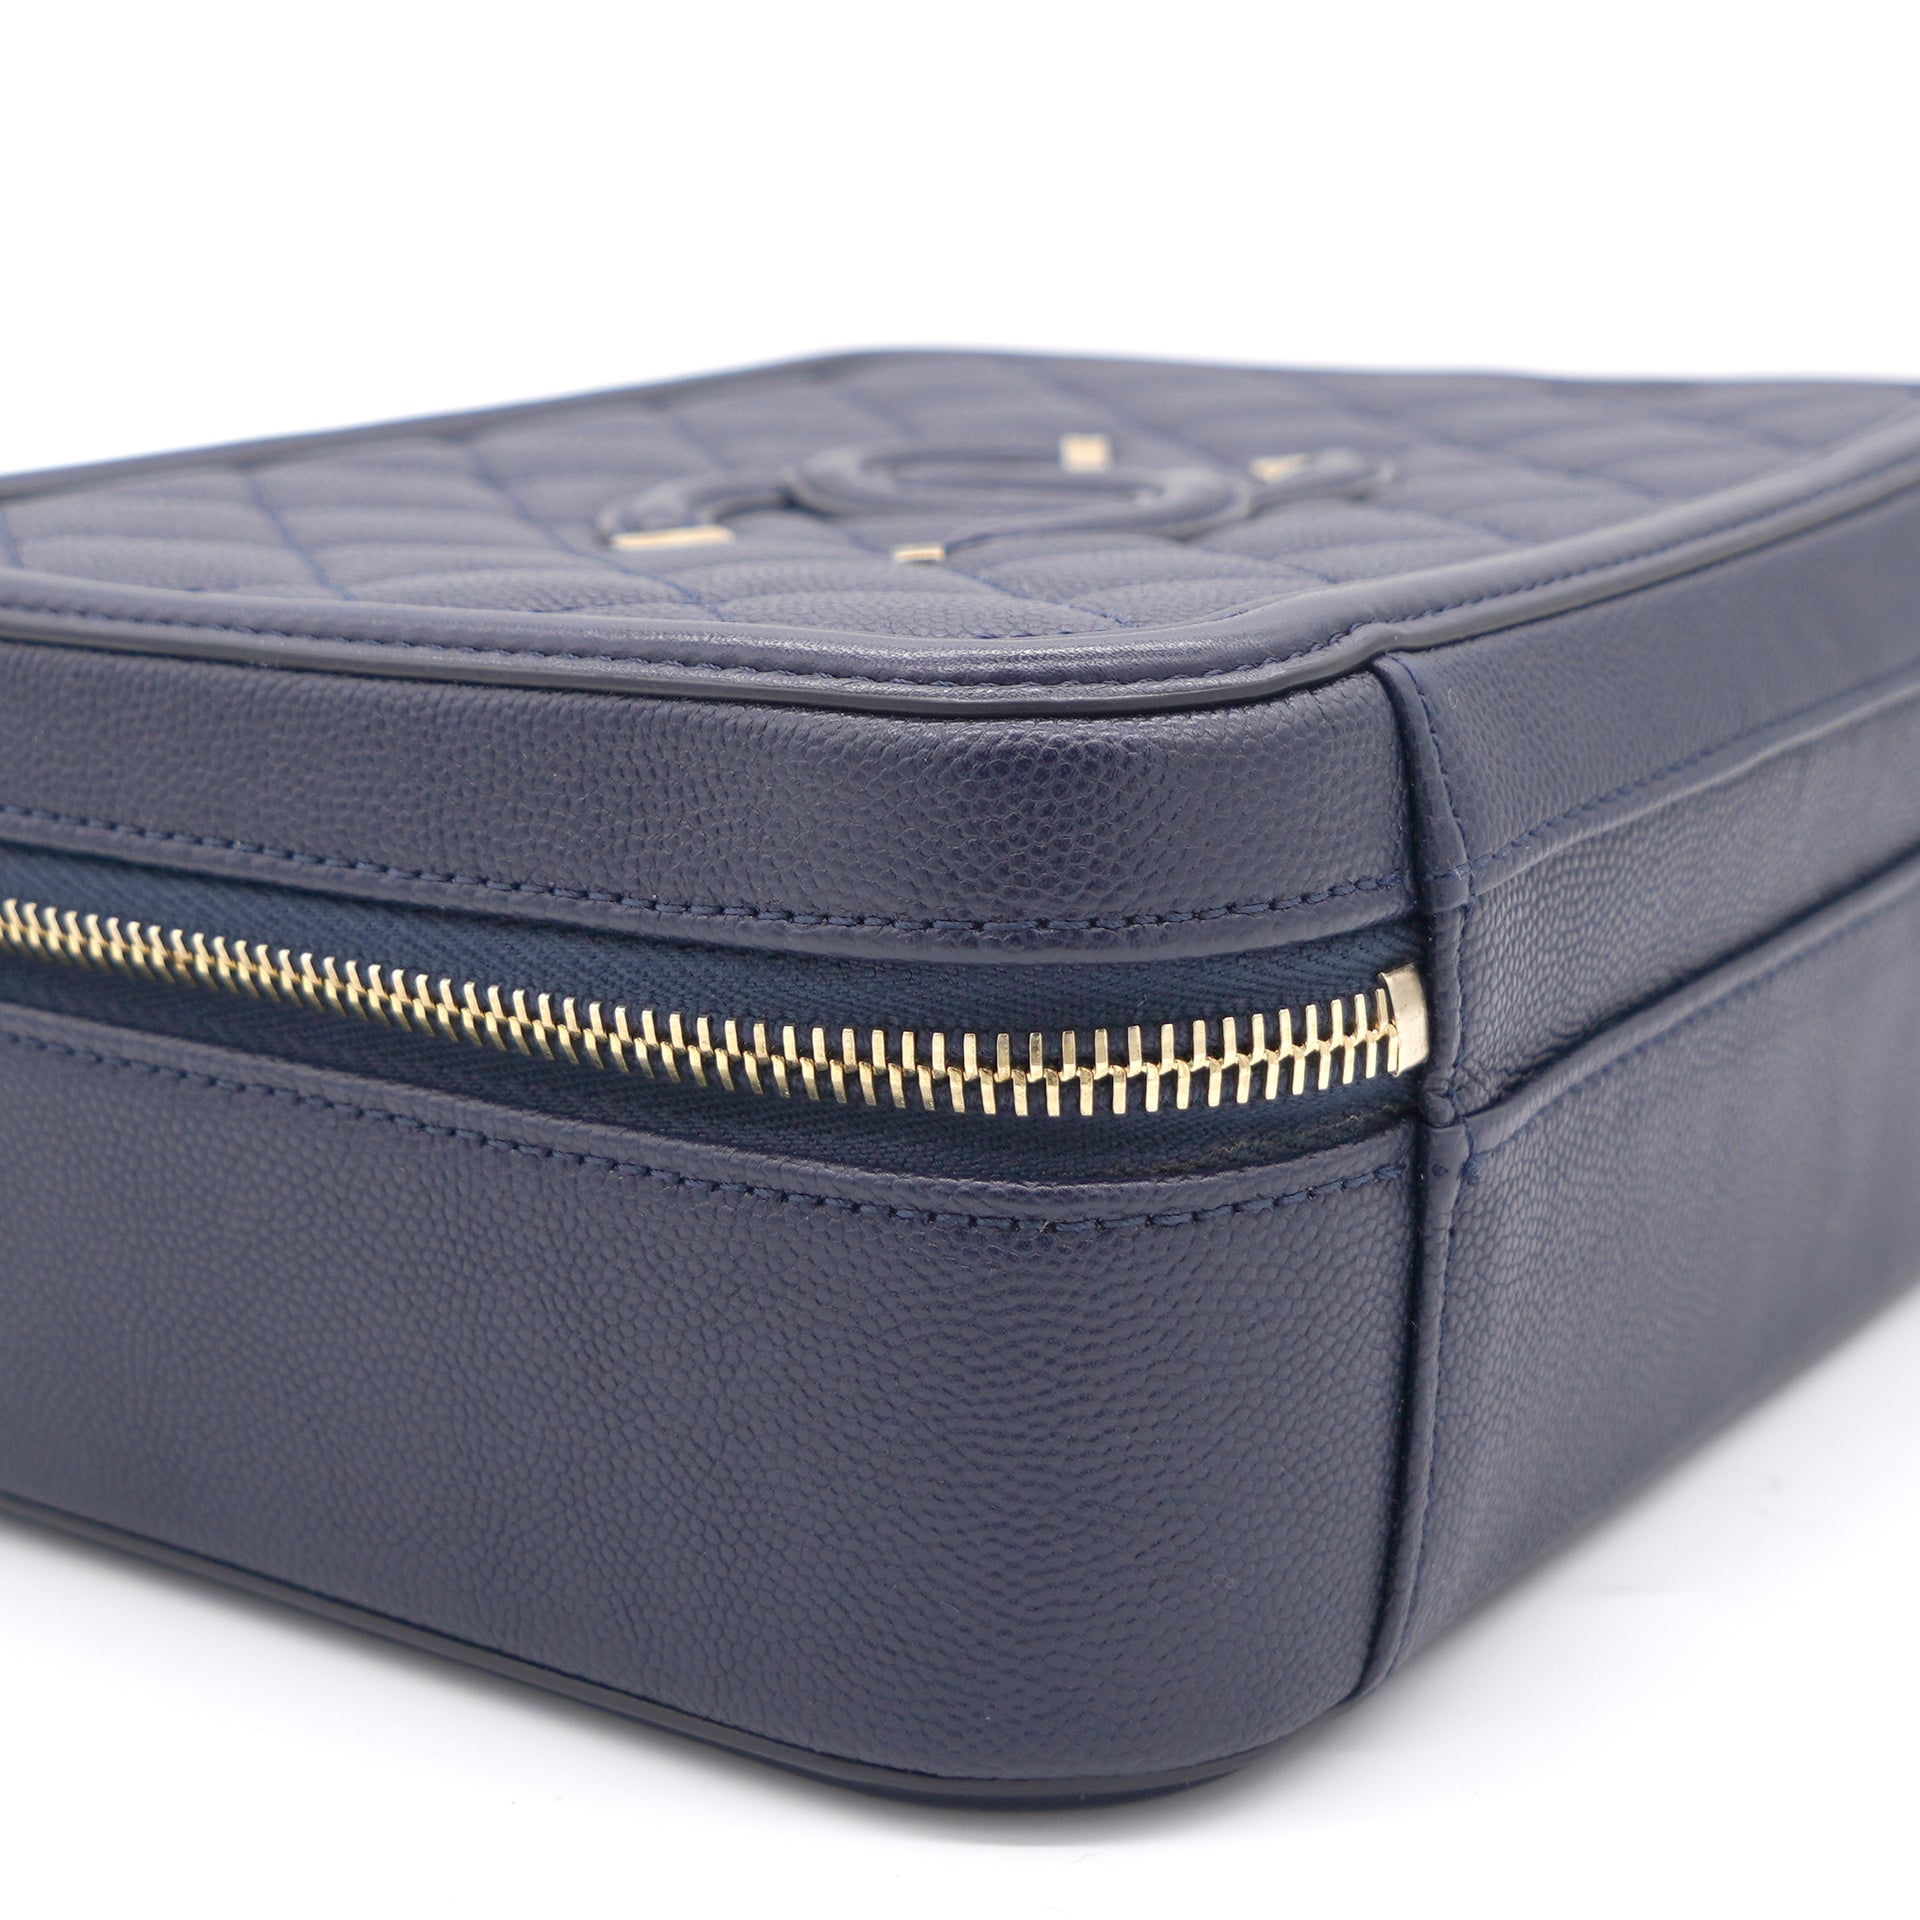 Navy Quilted Caviar Leather Medium CC Filigree Vanity Case Bag